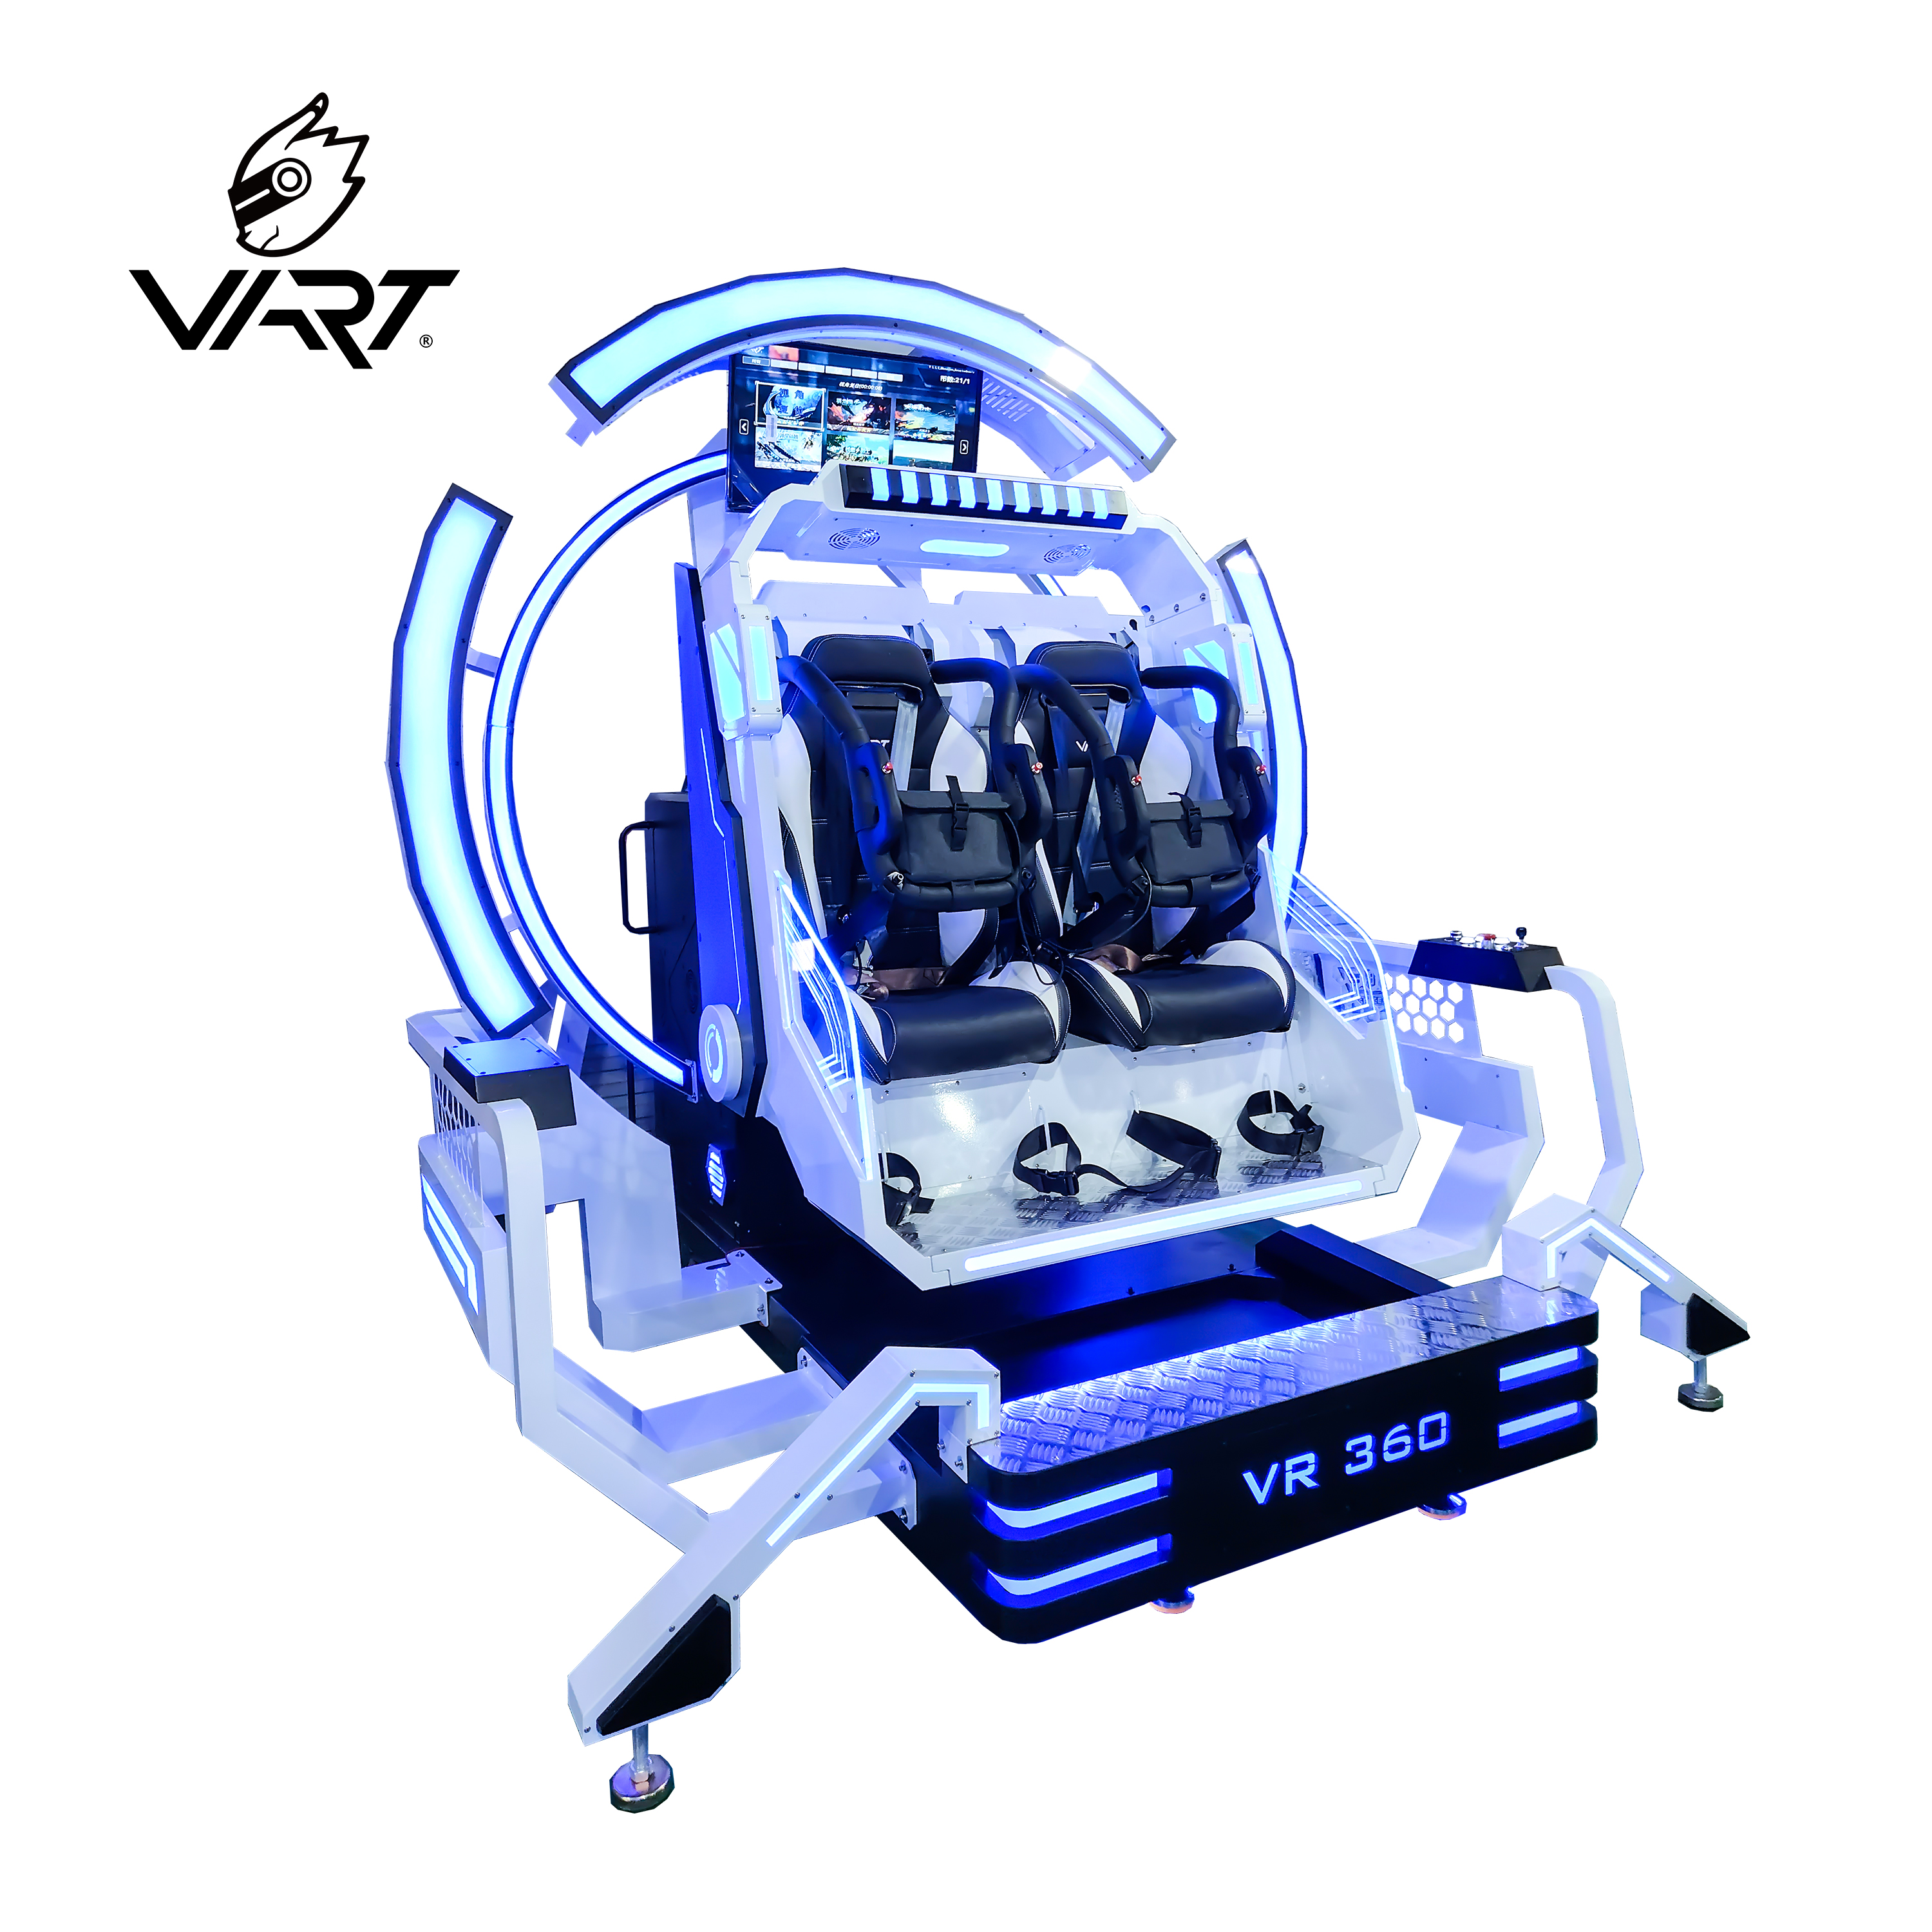 Utu iti mo te 9d Vr 360 Degree Headtracking Roller Coaster Simulator Plus Virtual Reality Vibration 9d Cinema Featured Image